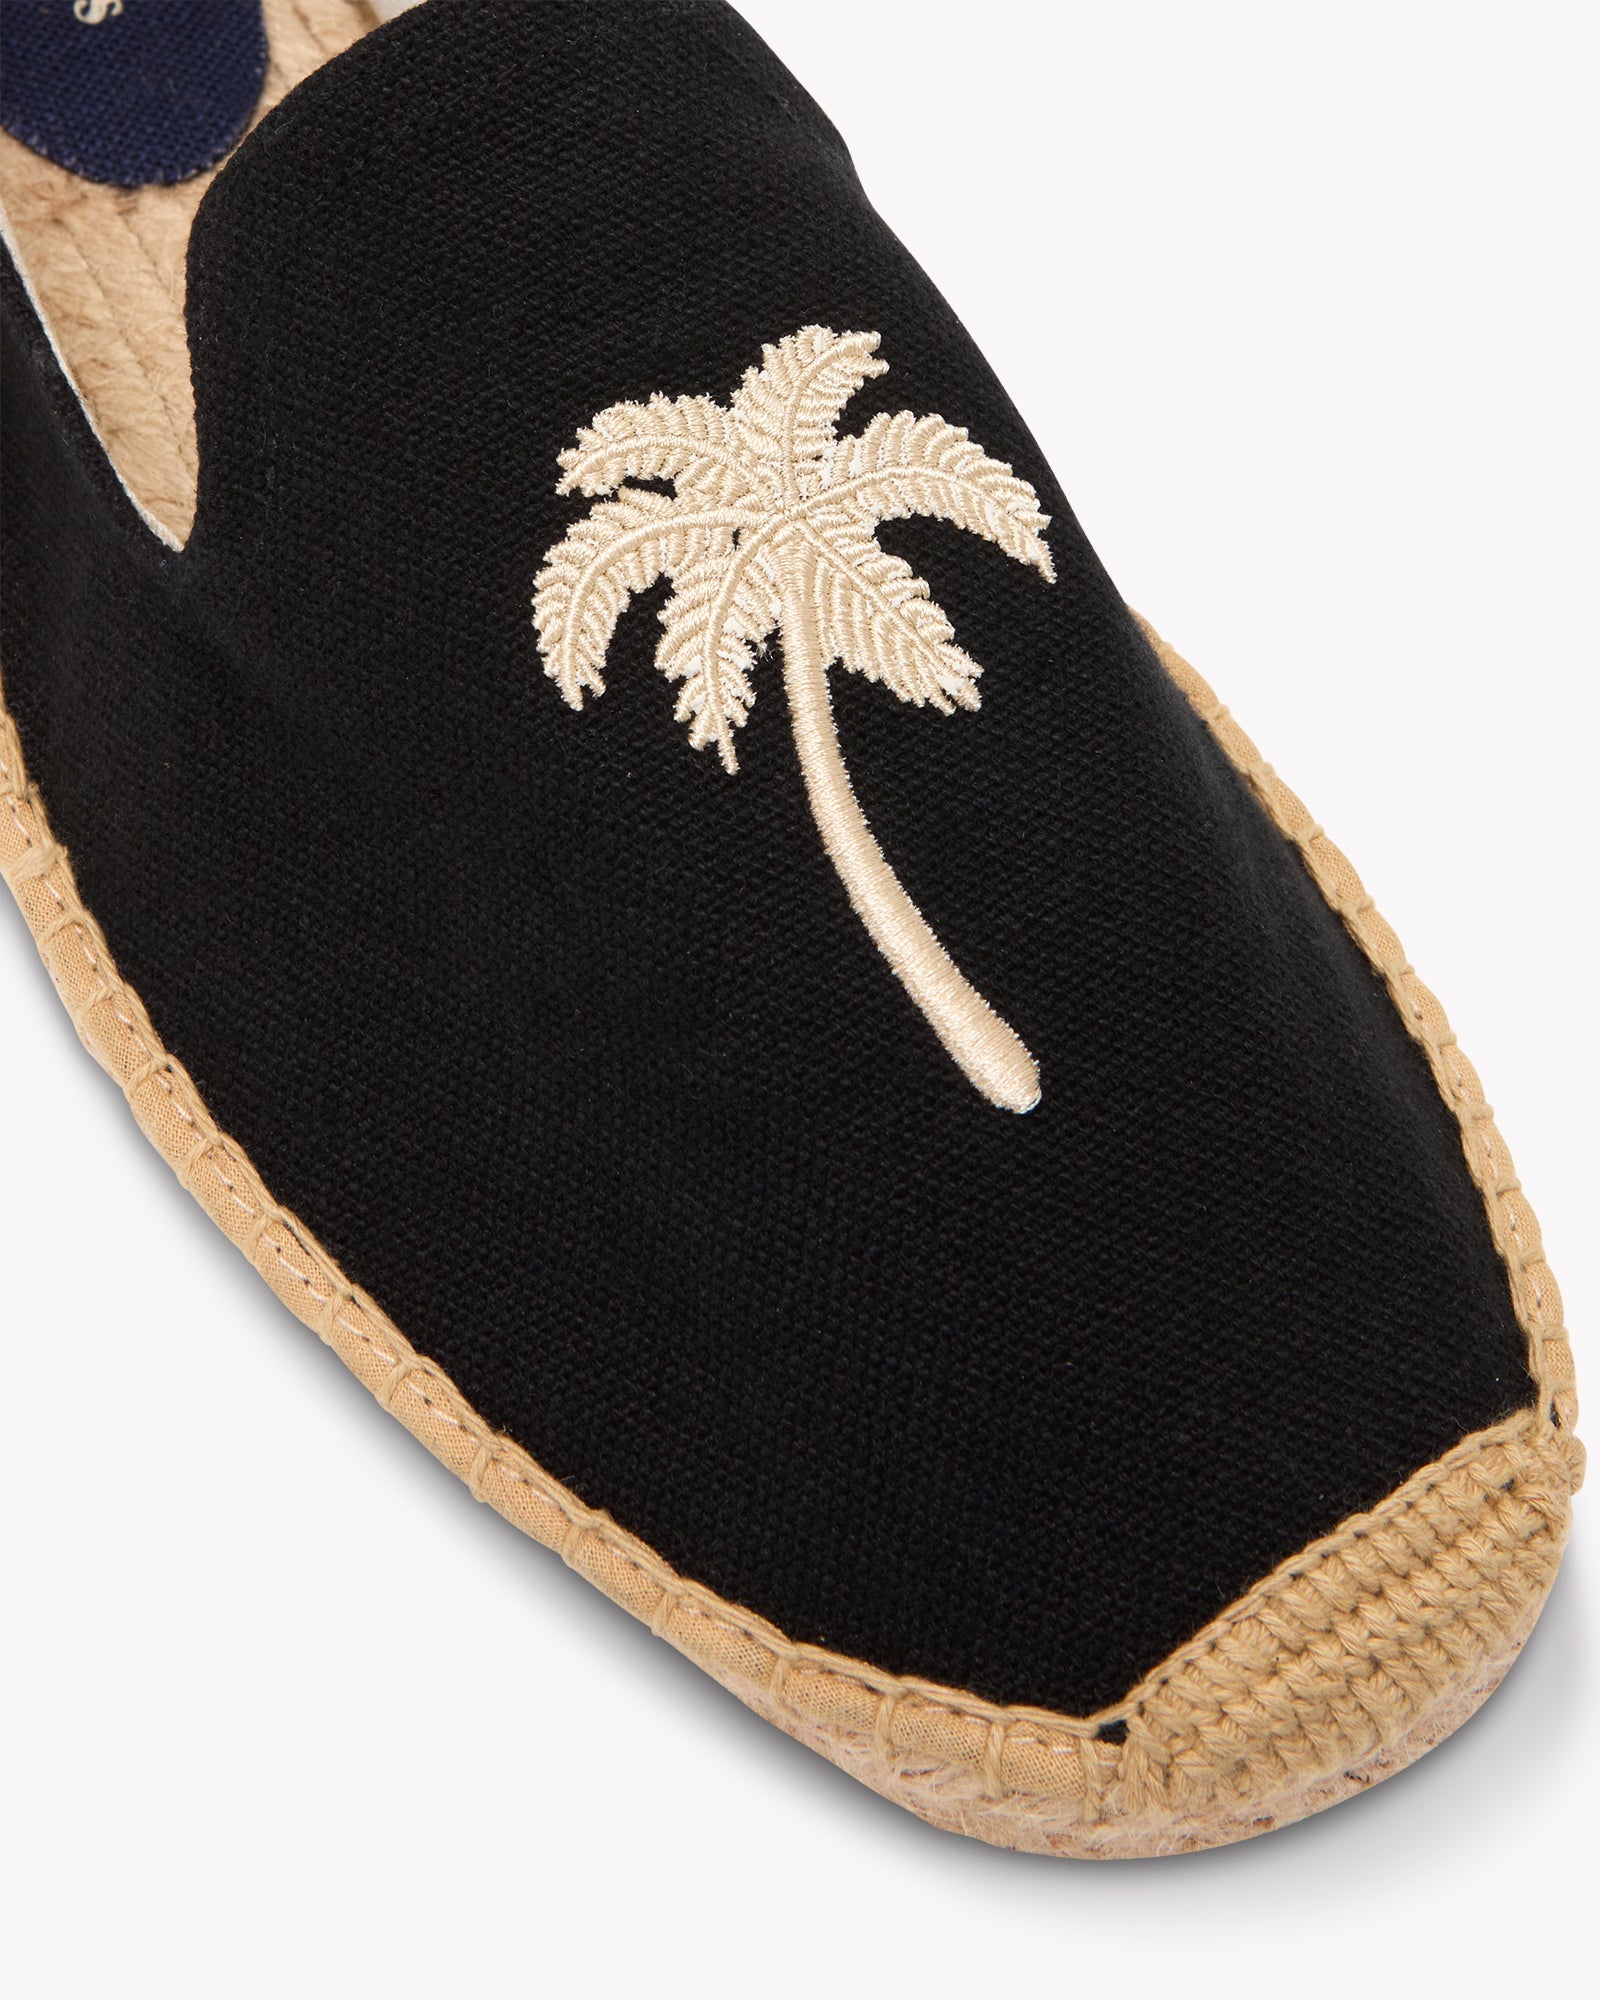 The Smoking Slipper - Embroidery / Palm Tree - Black - Men's